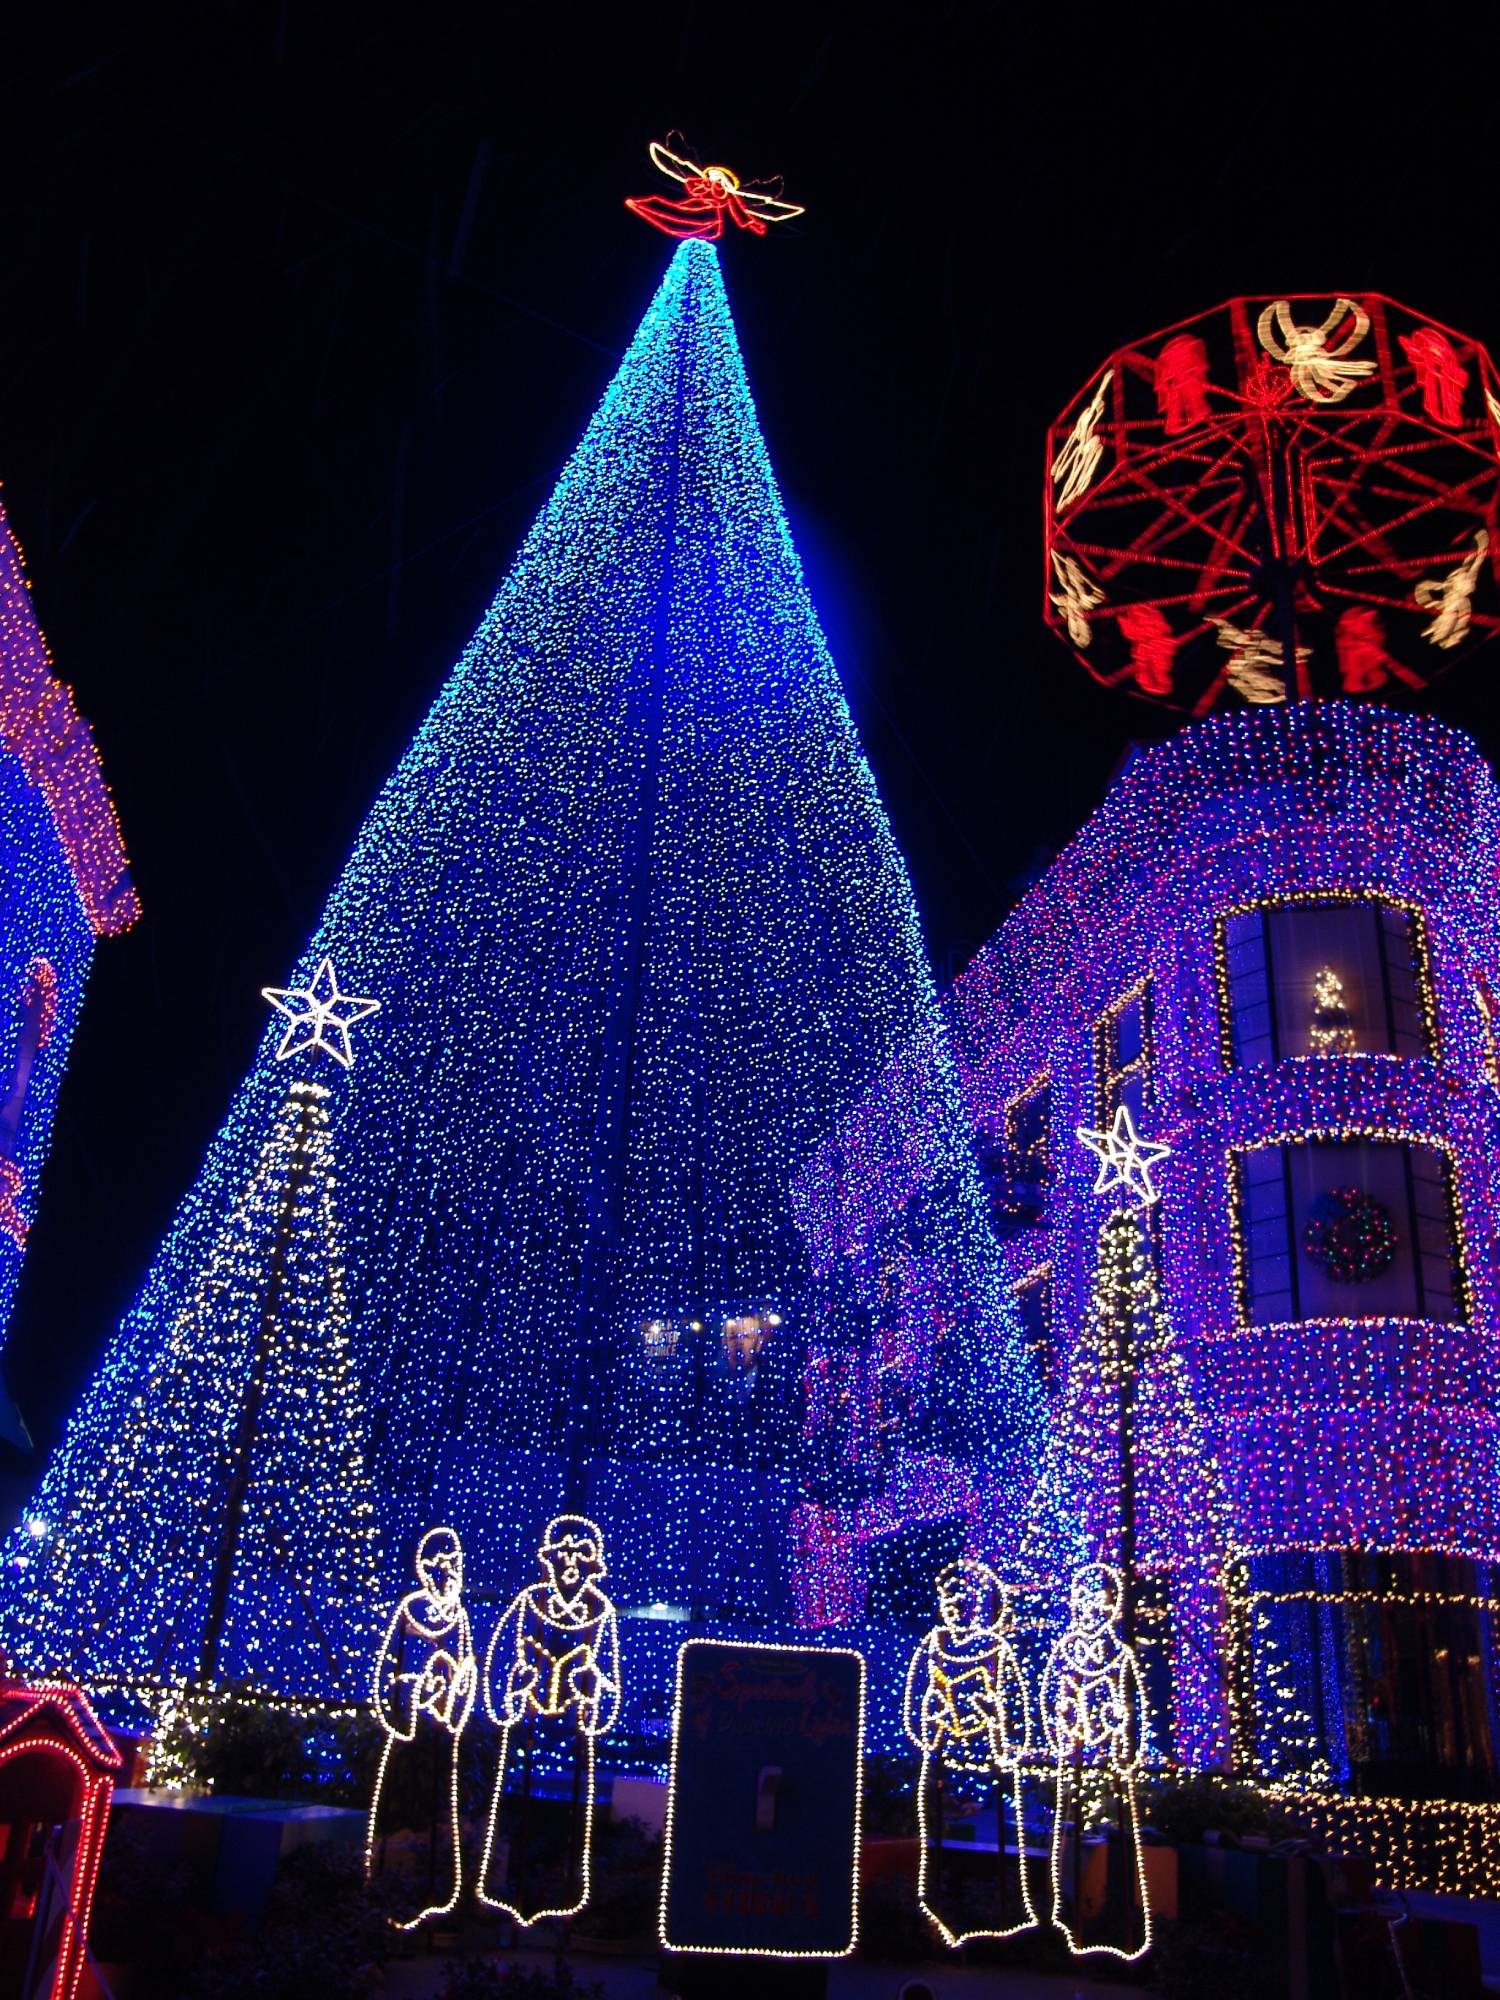 Disney's Hollywood Studios - Osborne Spectacle of Lights